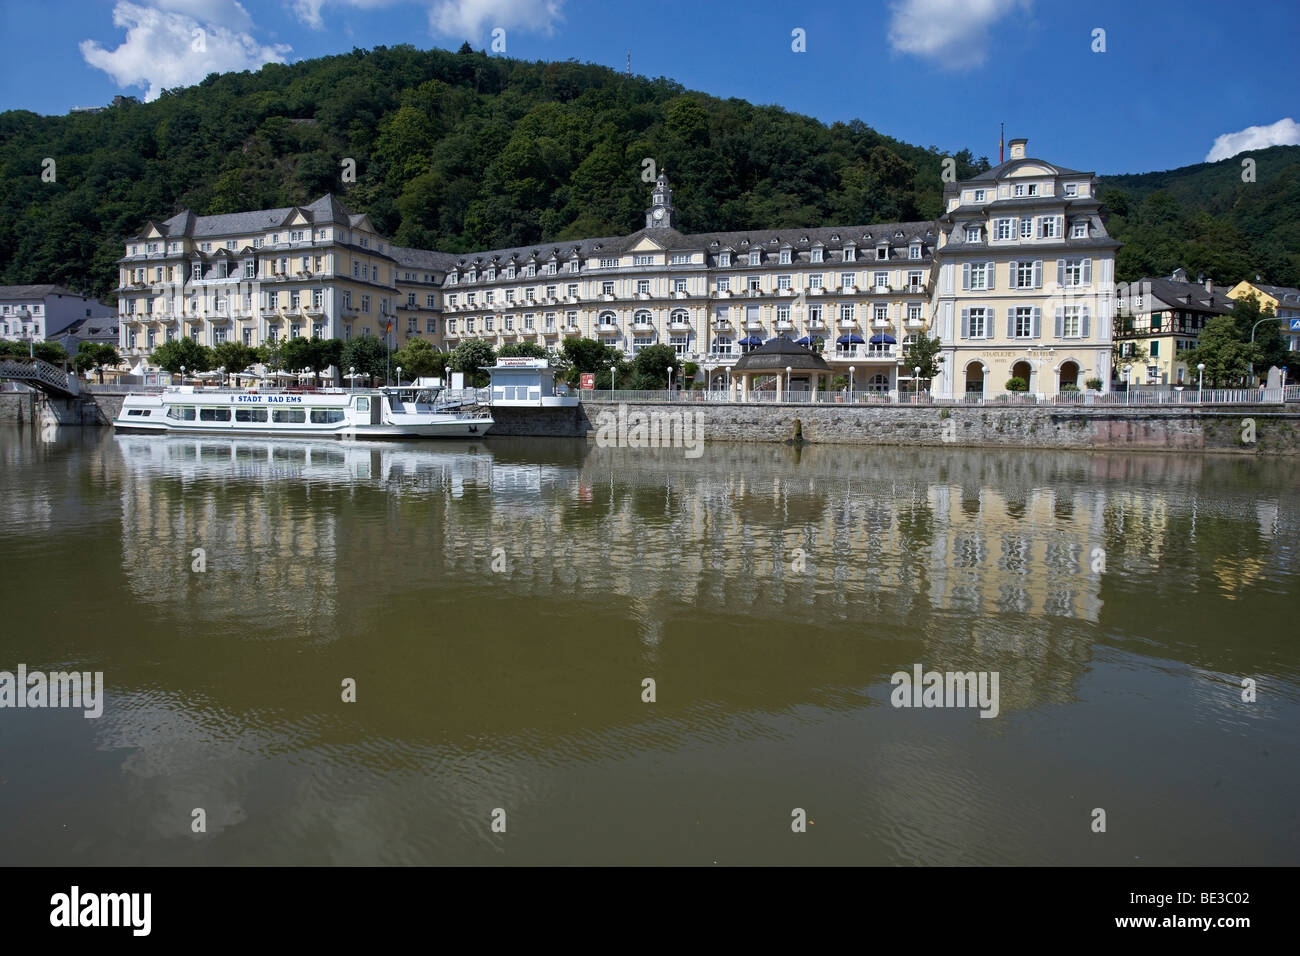 The Kurhaus spa hotel in Bad Ems, Rhineland-Palatinate, Germany, Europe Stock Photo